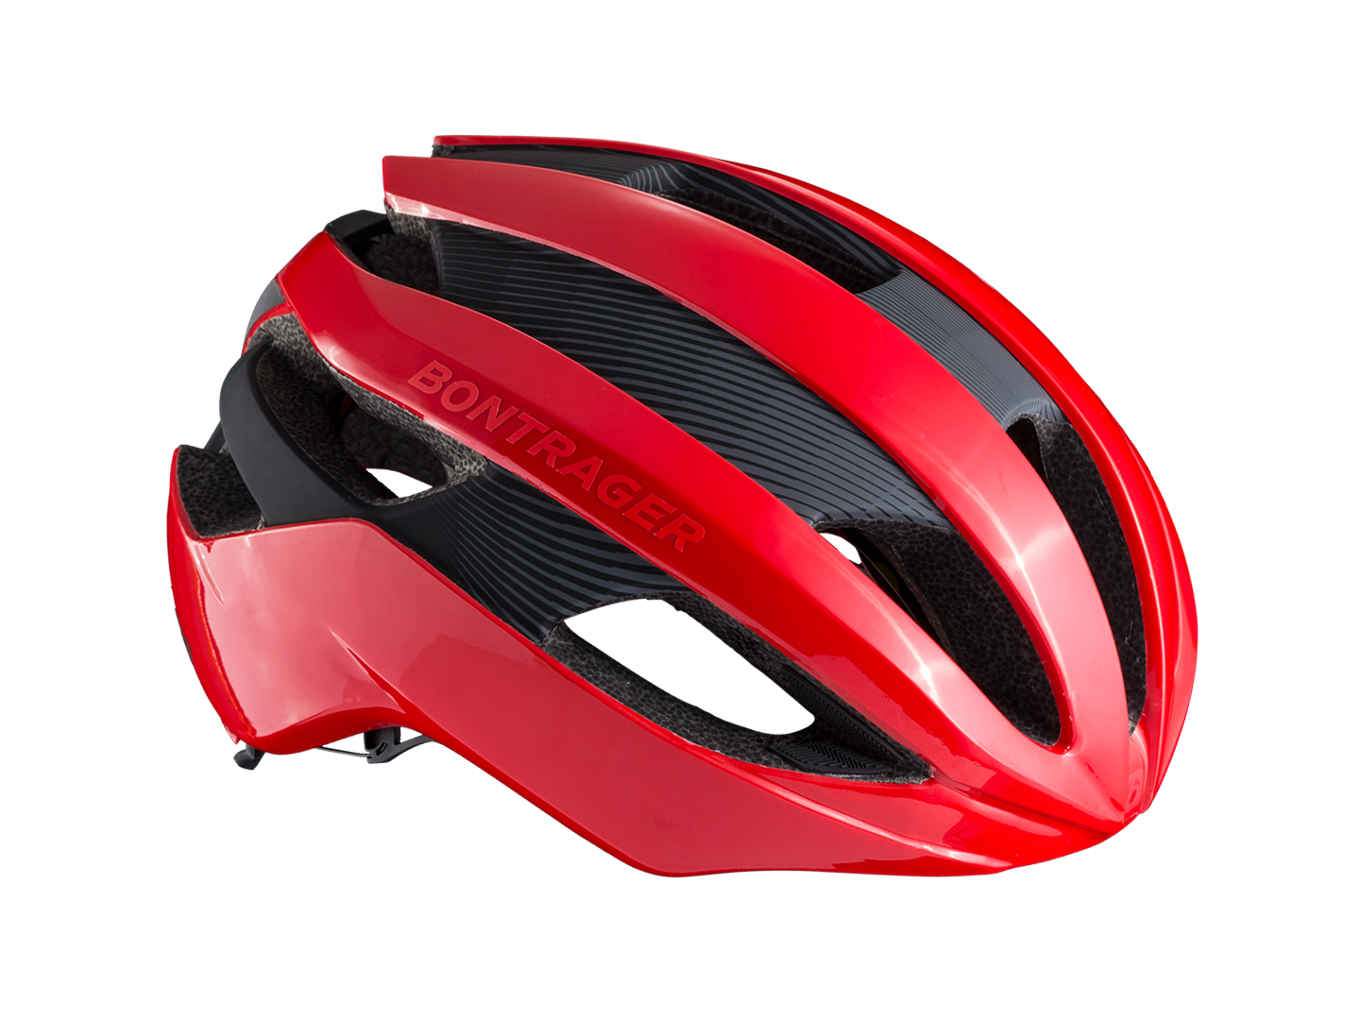 Bontrager Velocis MIPS Helmet